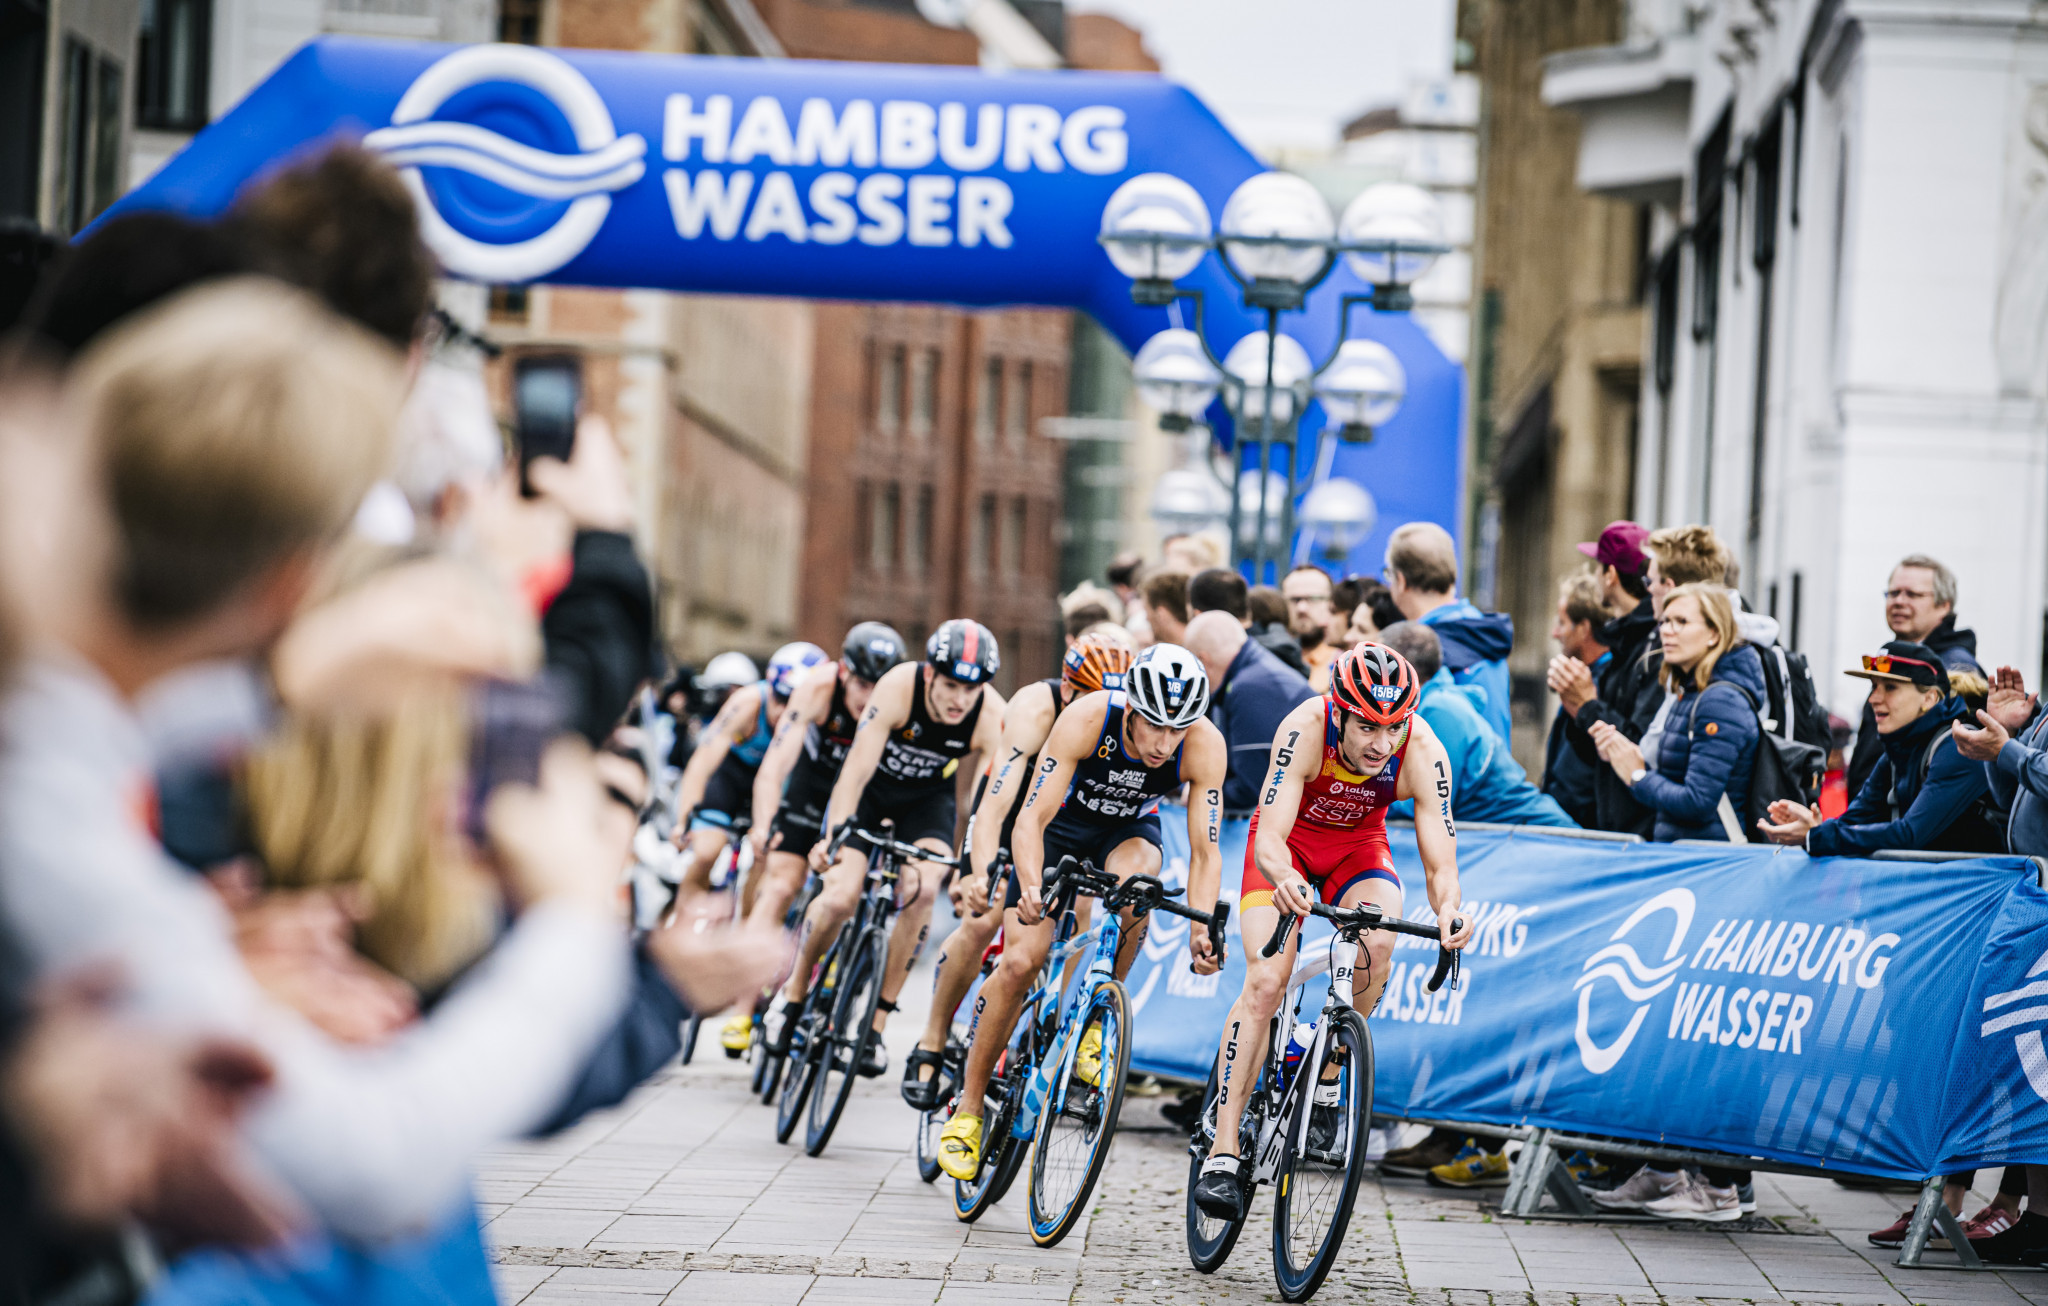 Postponed Hamburg World Triathlon Championship Series event will now start 2021-2022 season